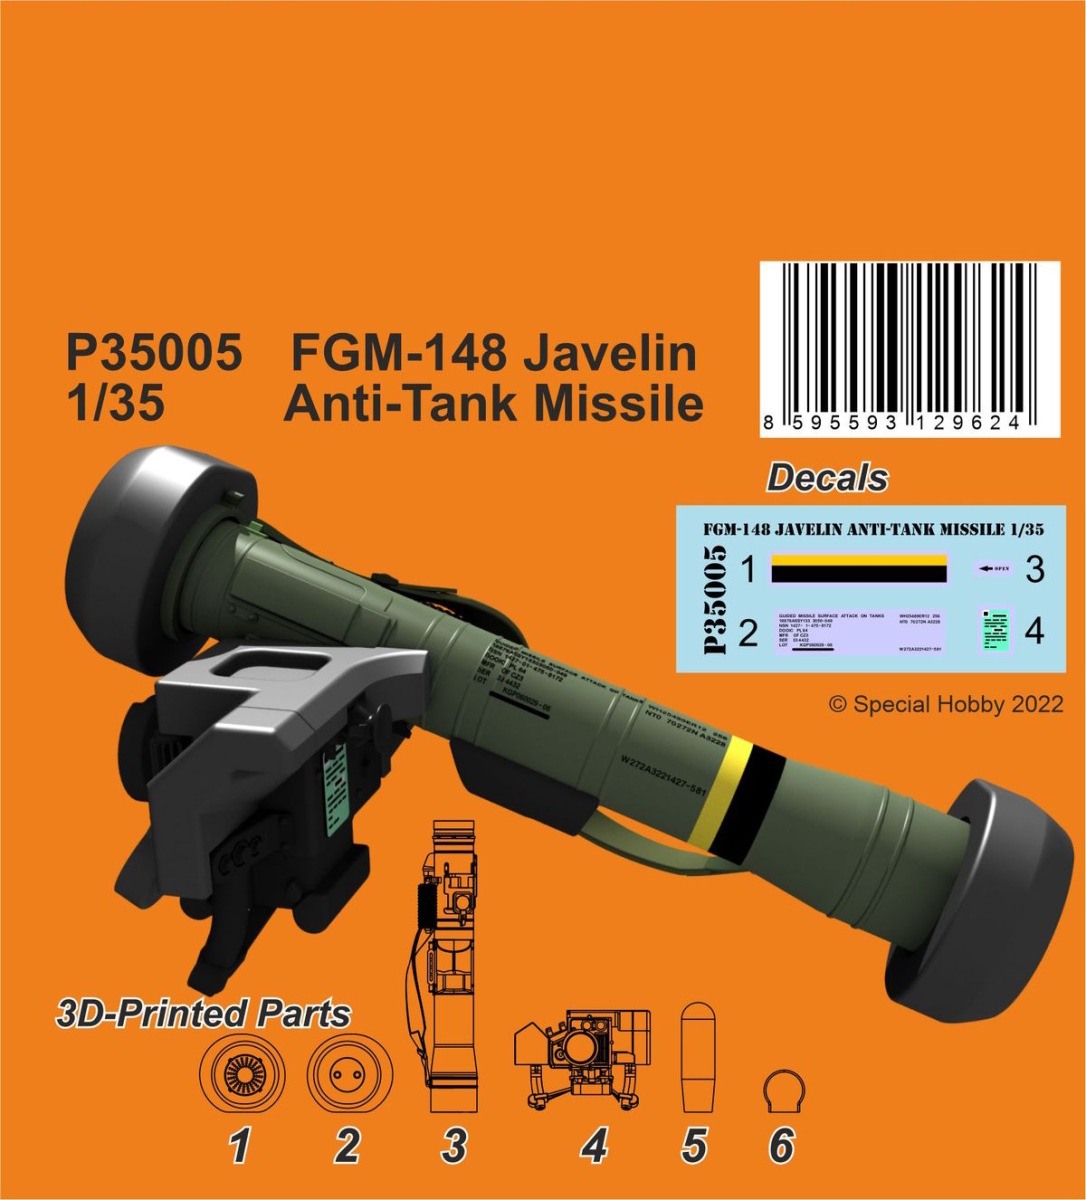 1/35 FGM-148 Javelin Anti-Tank Missile